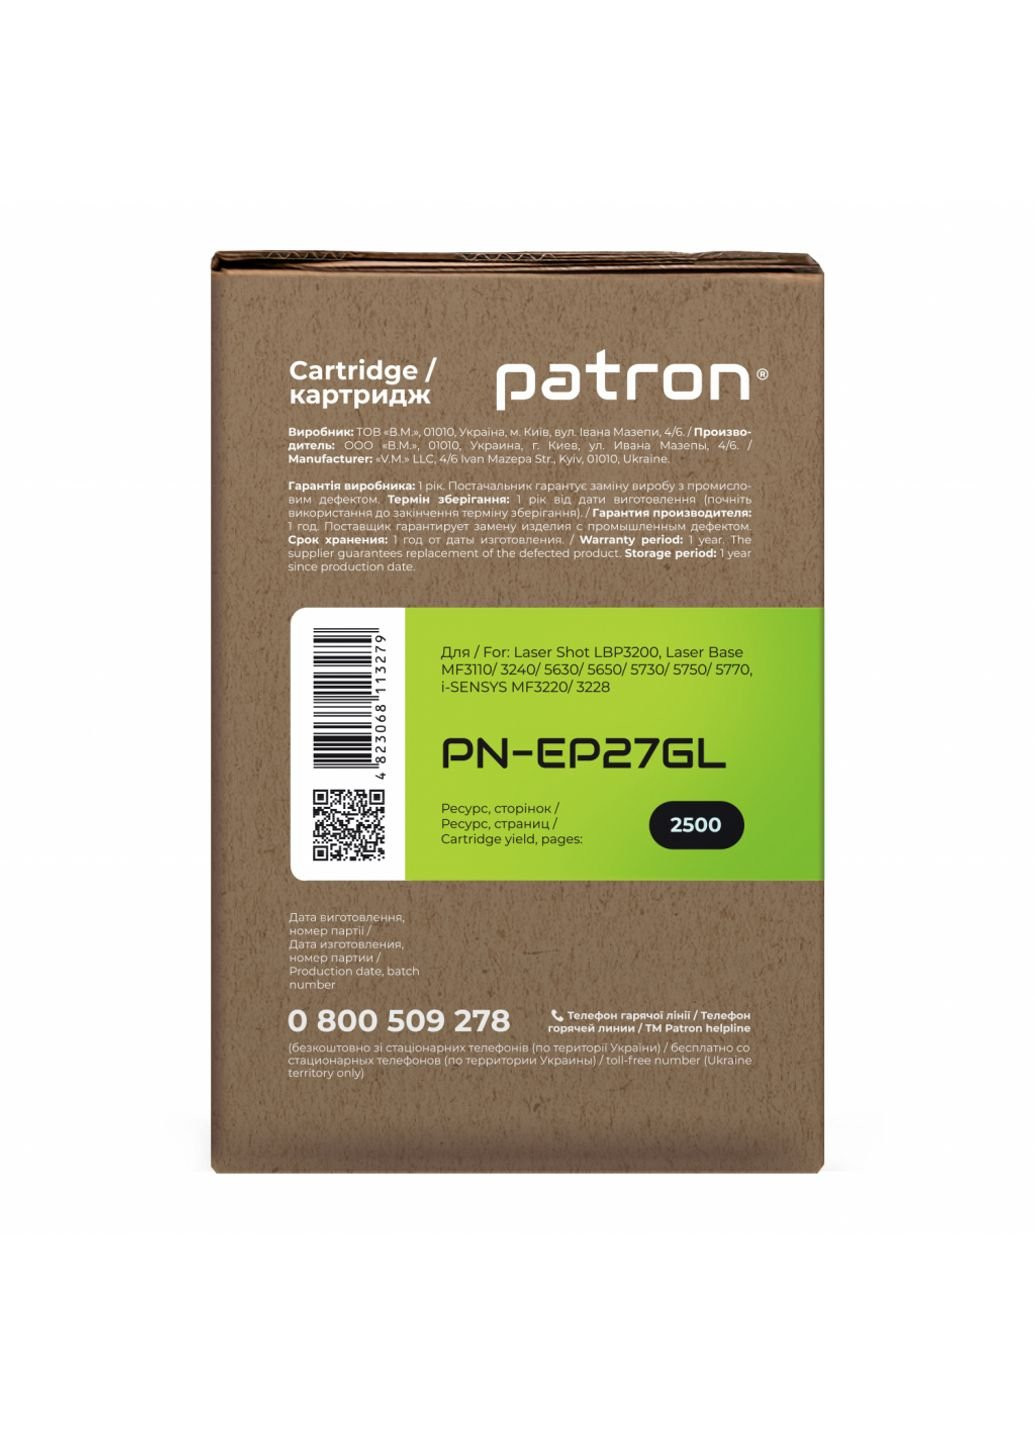 Картридж (PN-EP27GL) Patron canon ep-27 green label (247618663)